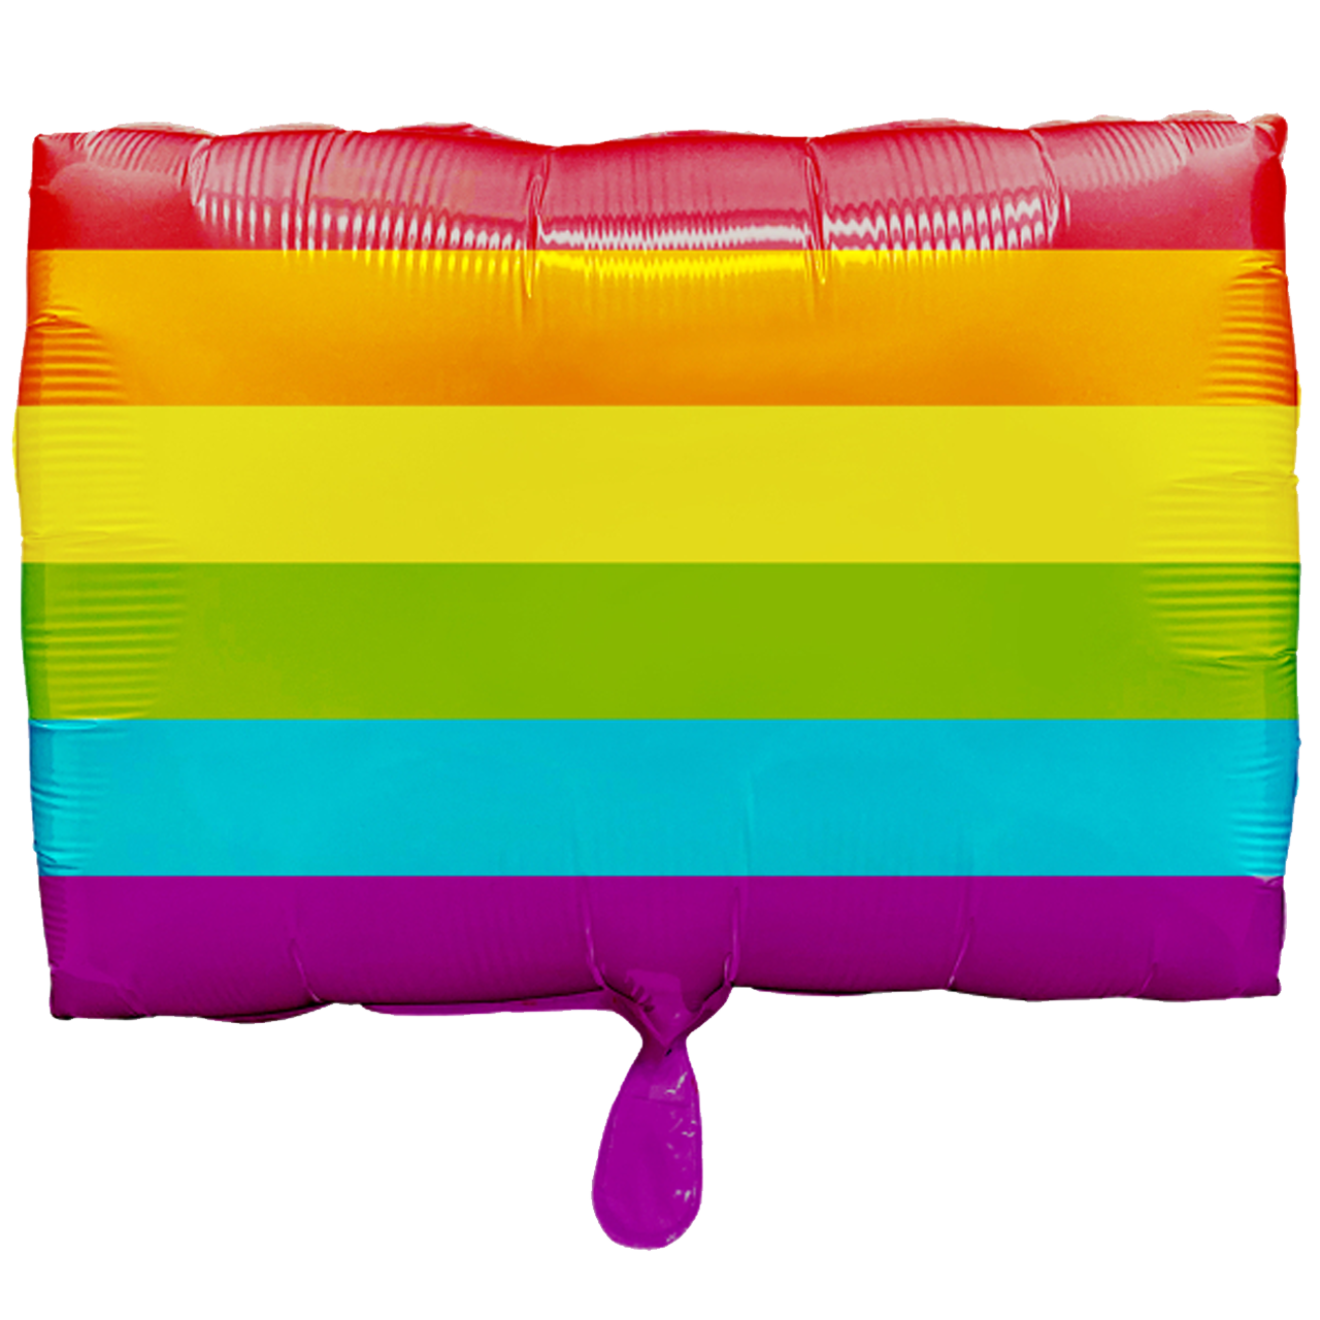 1 Balloon - Rainbow Flag